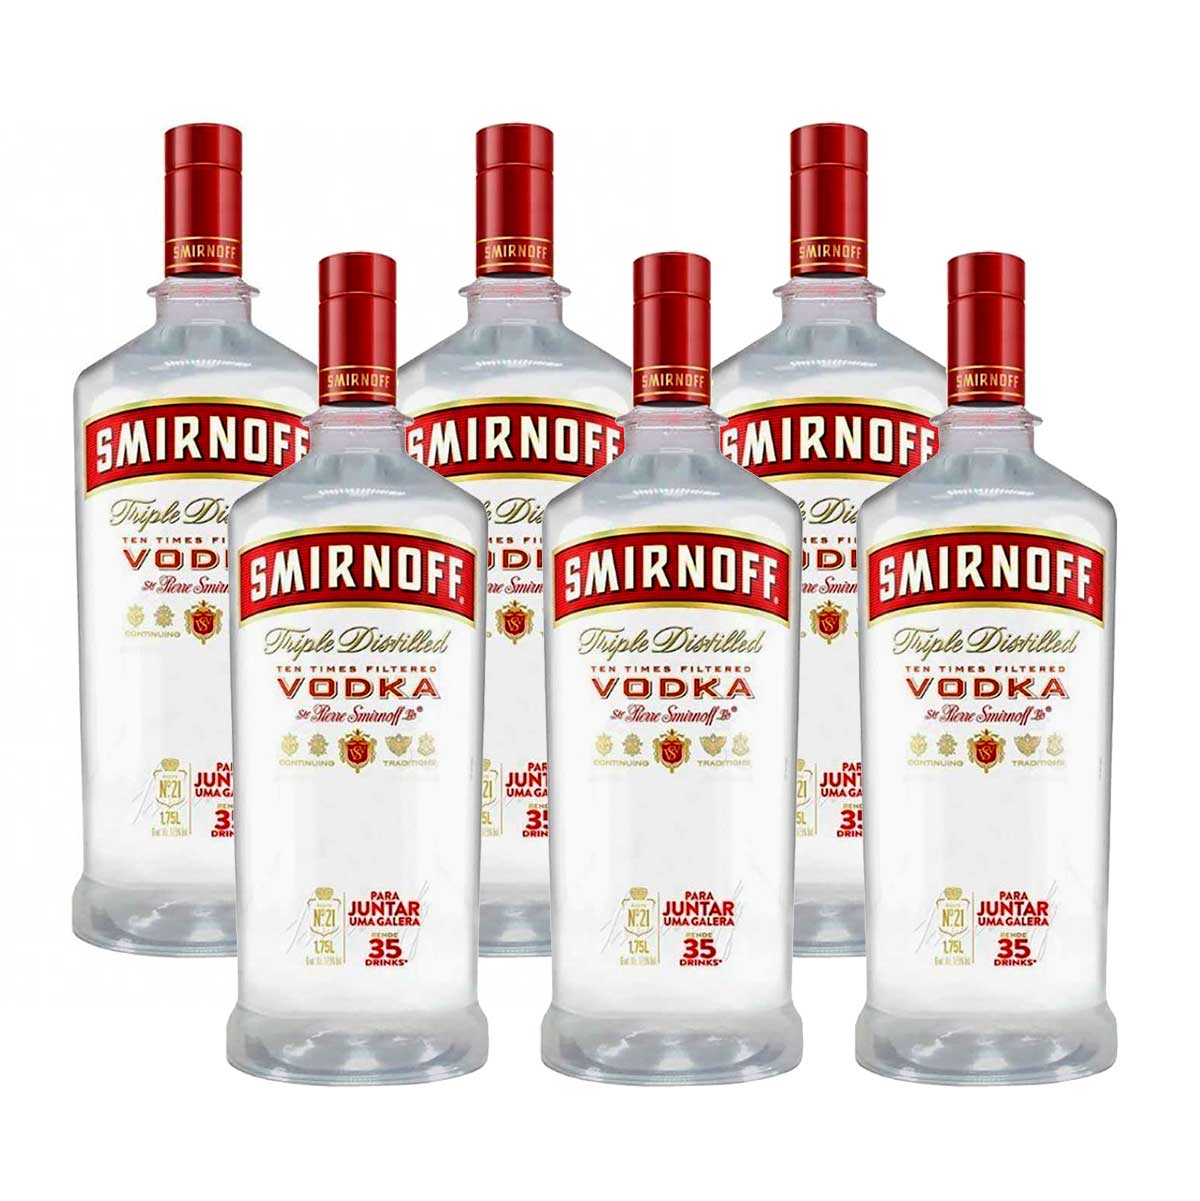 Caixa 6 Unidades Vodka Smirnoff - 1750ml Cada